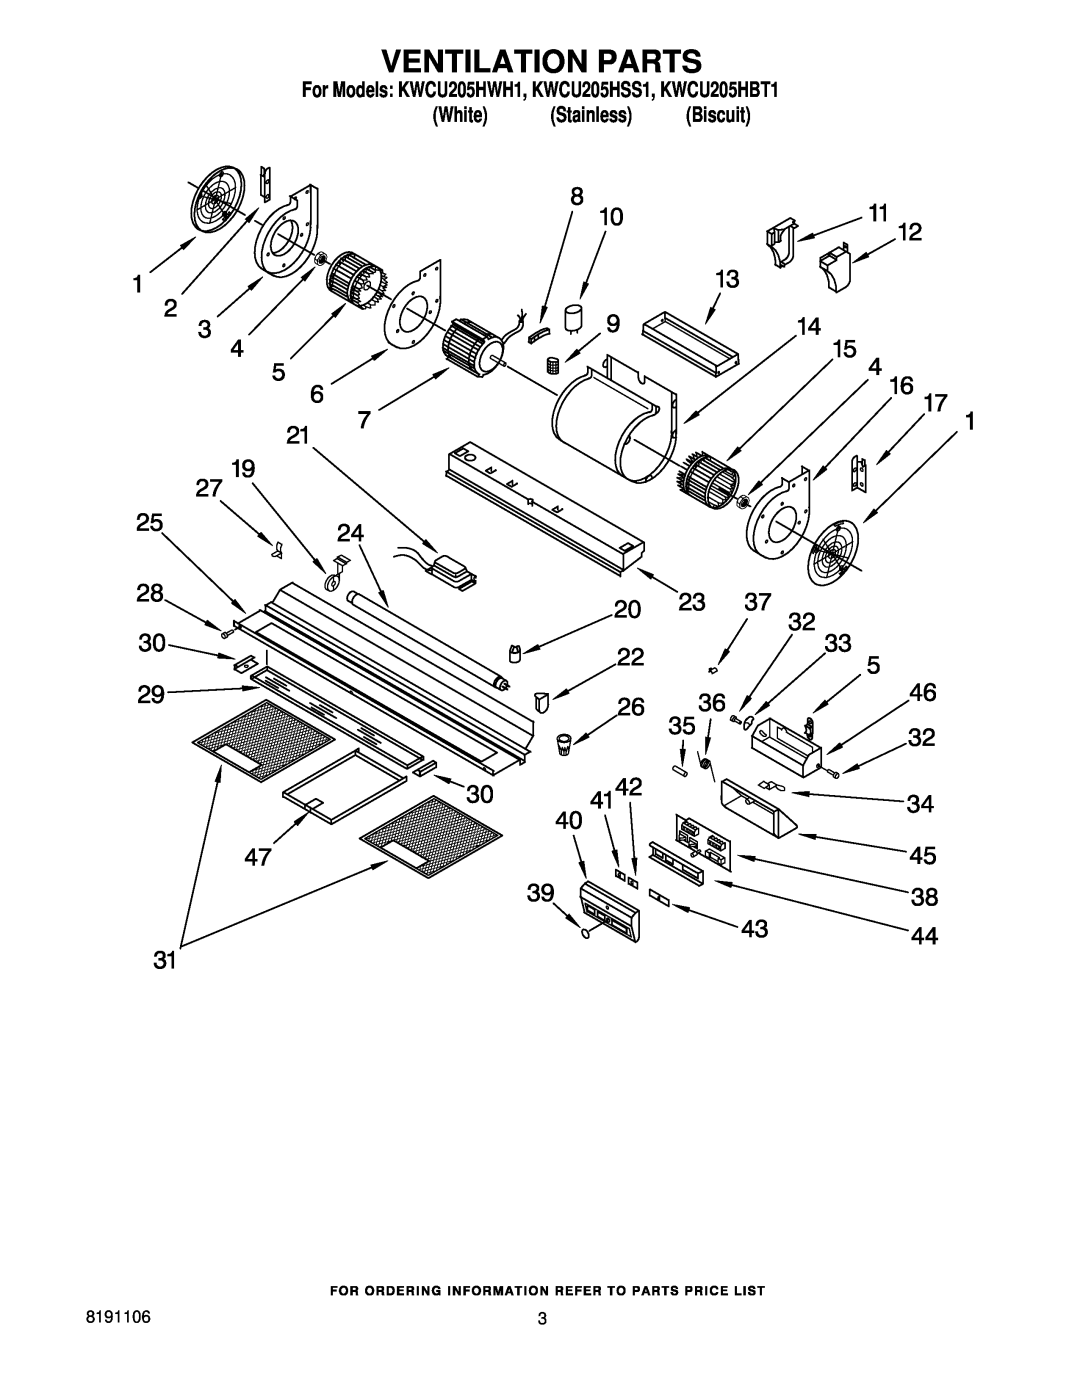 KitchenAid manual Ventilation Parts, For Models KWCU205HWH1, KWCU205HSS1, KWCU205HBT1, White Stainless Biscuit 